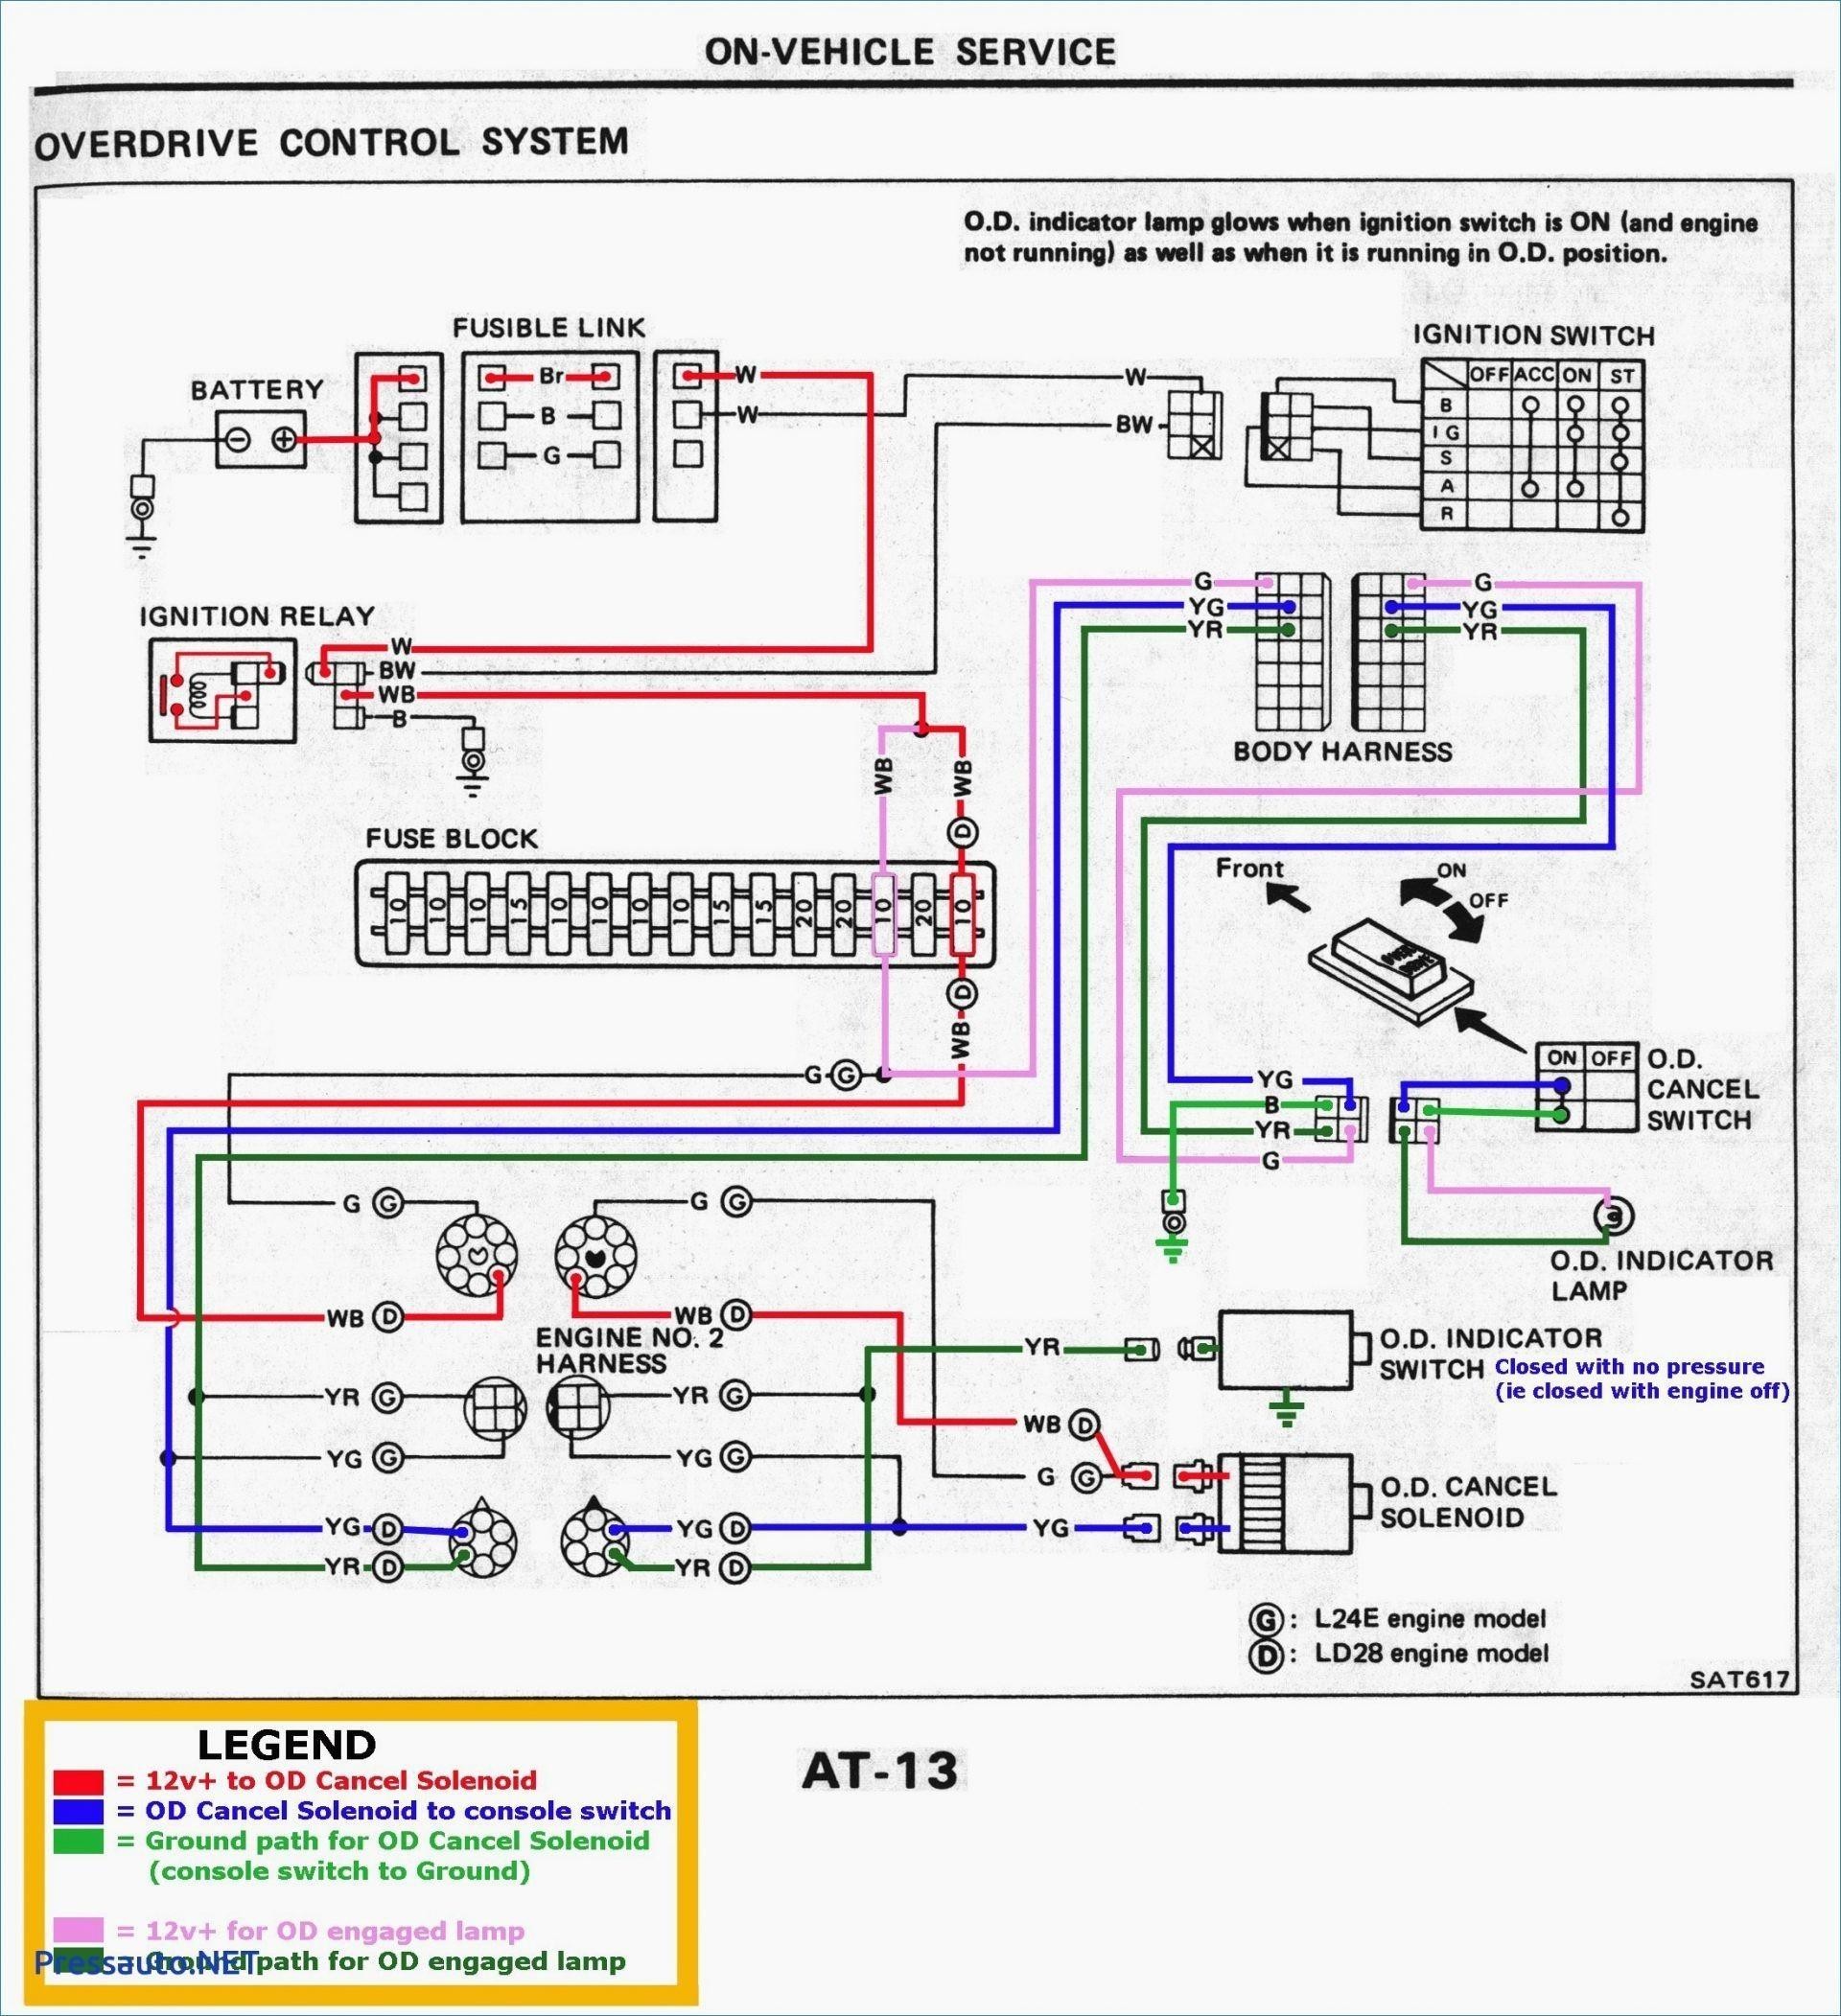 2004 Dodge Ram 1500 Parts Diagram 2015 Ram 1500 Wiring Diagram Worksheet and Wiring Diagram • Of 2004 Dodge Ram 1500 Parts Diagram